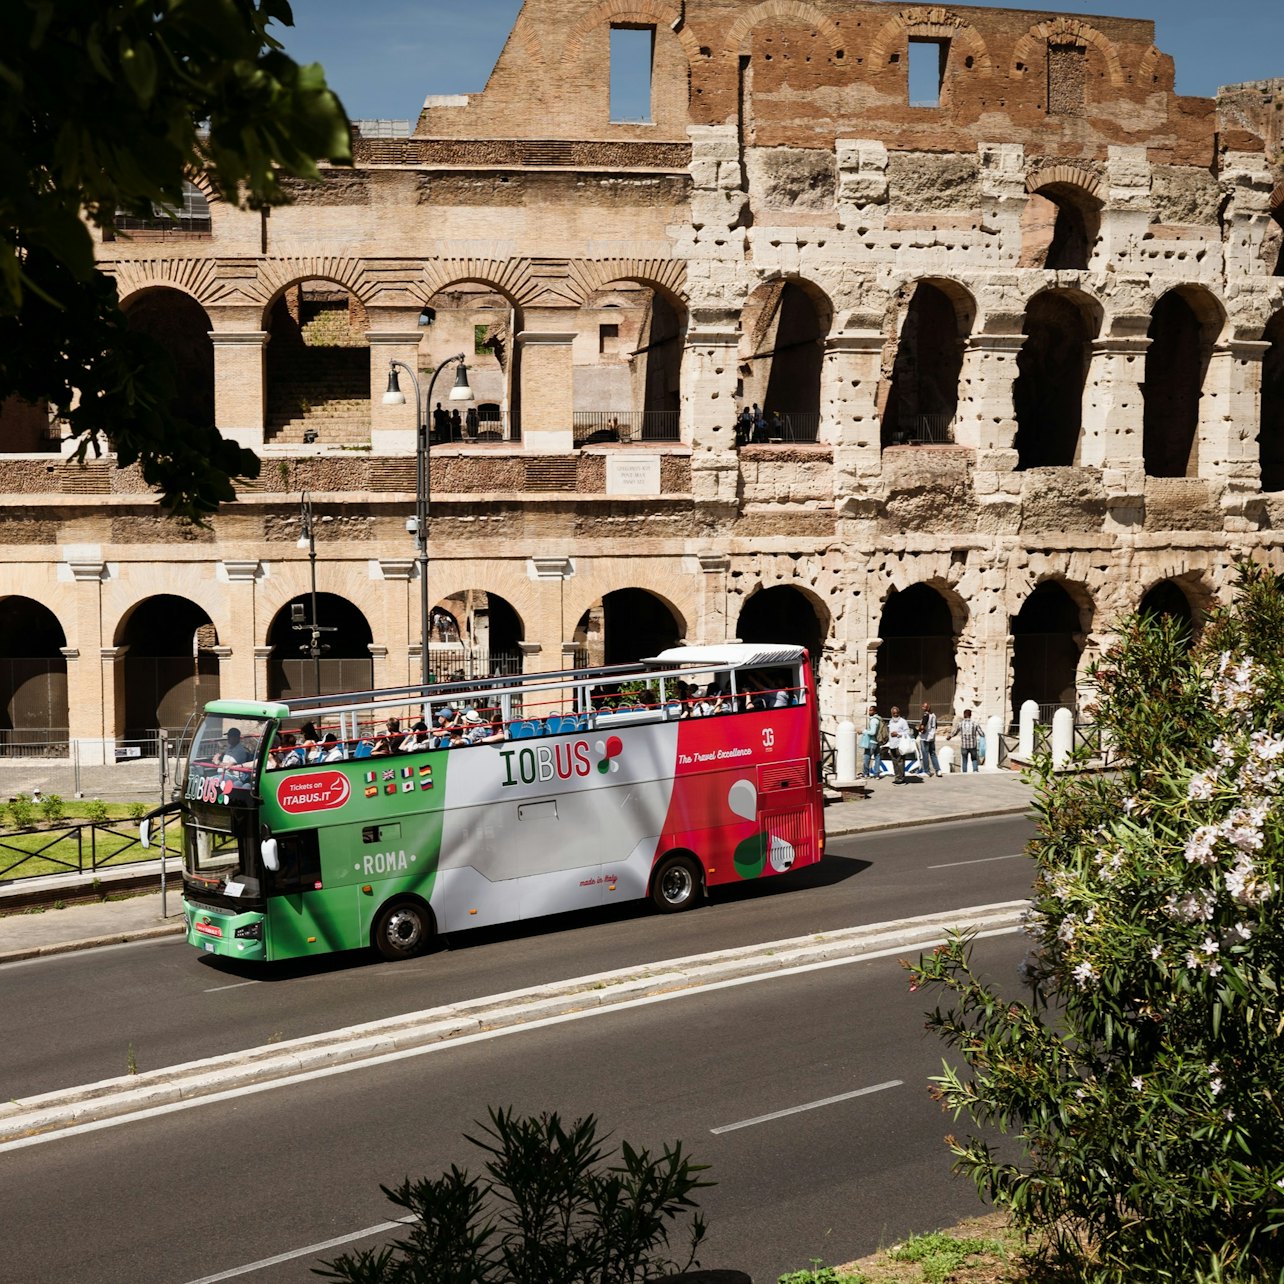 IOBUS Roma: Tour panorámico en bus turístico descubierto - Alojamientos en Roma